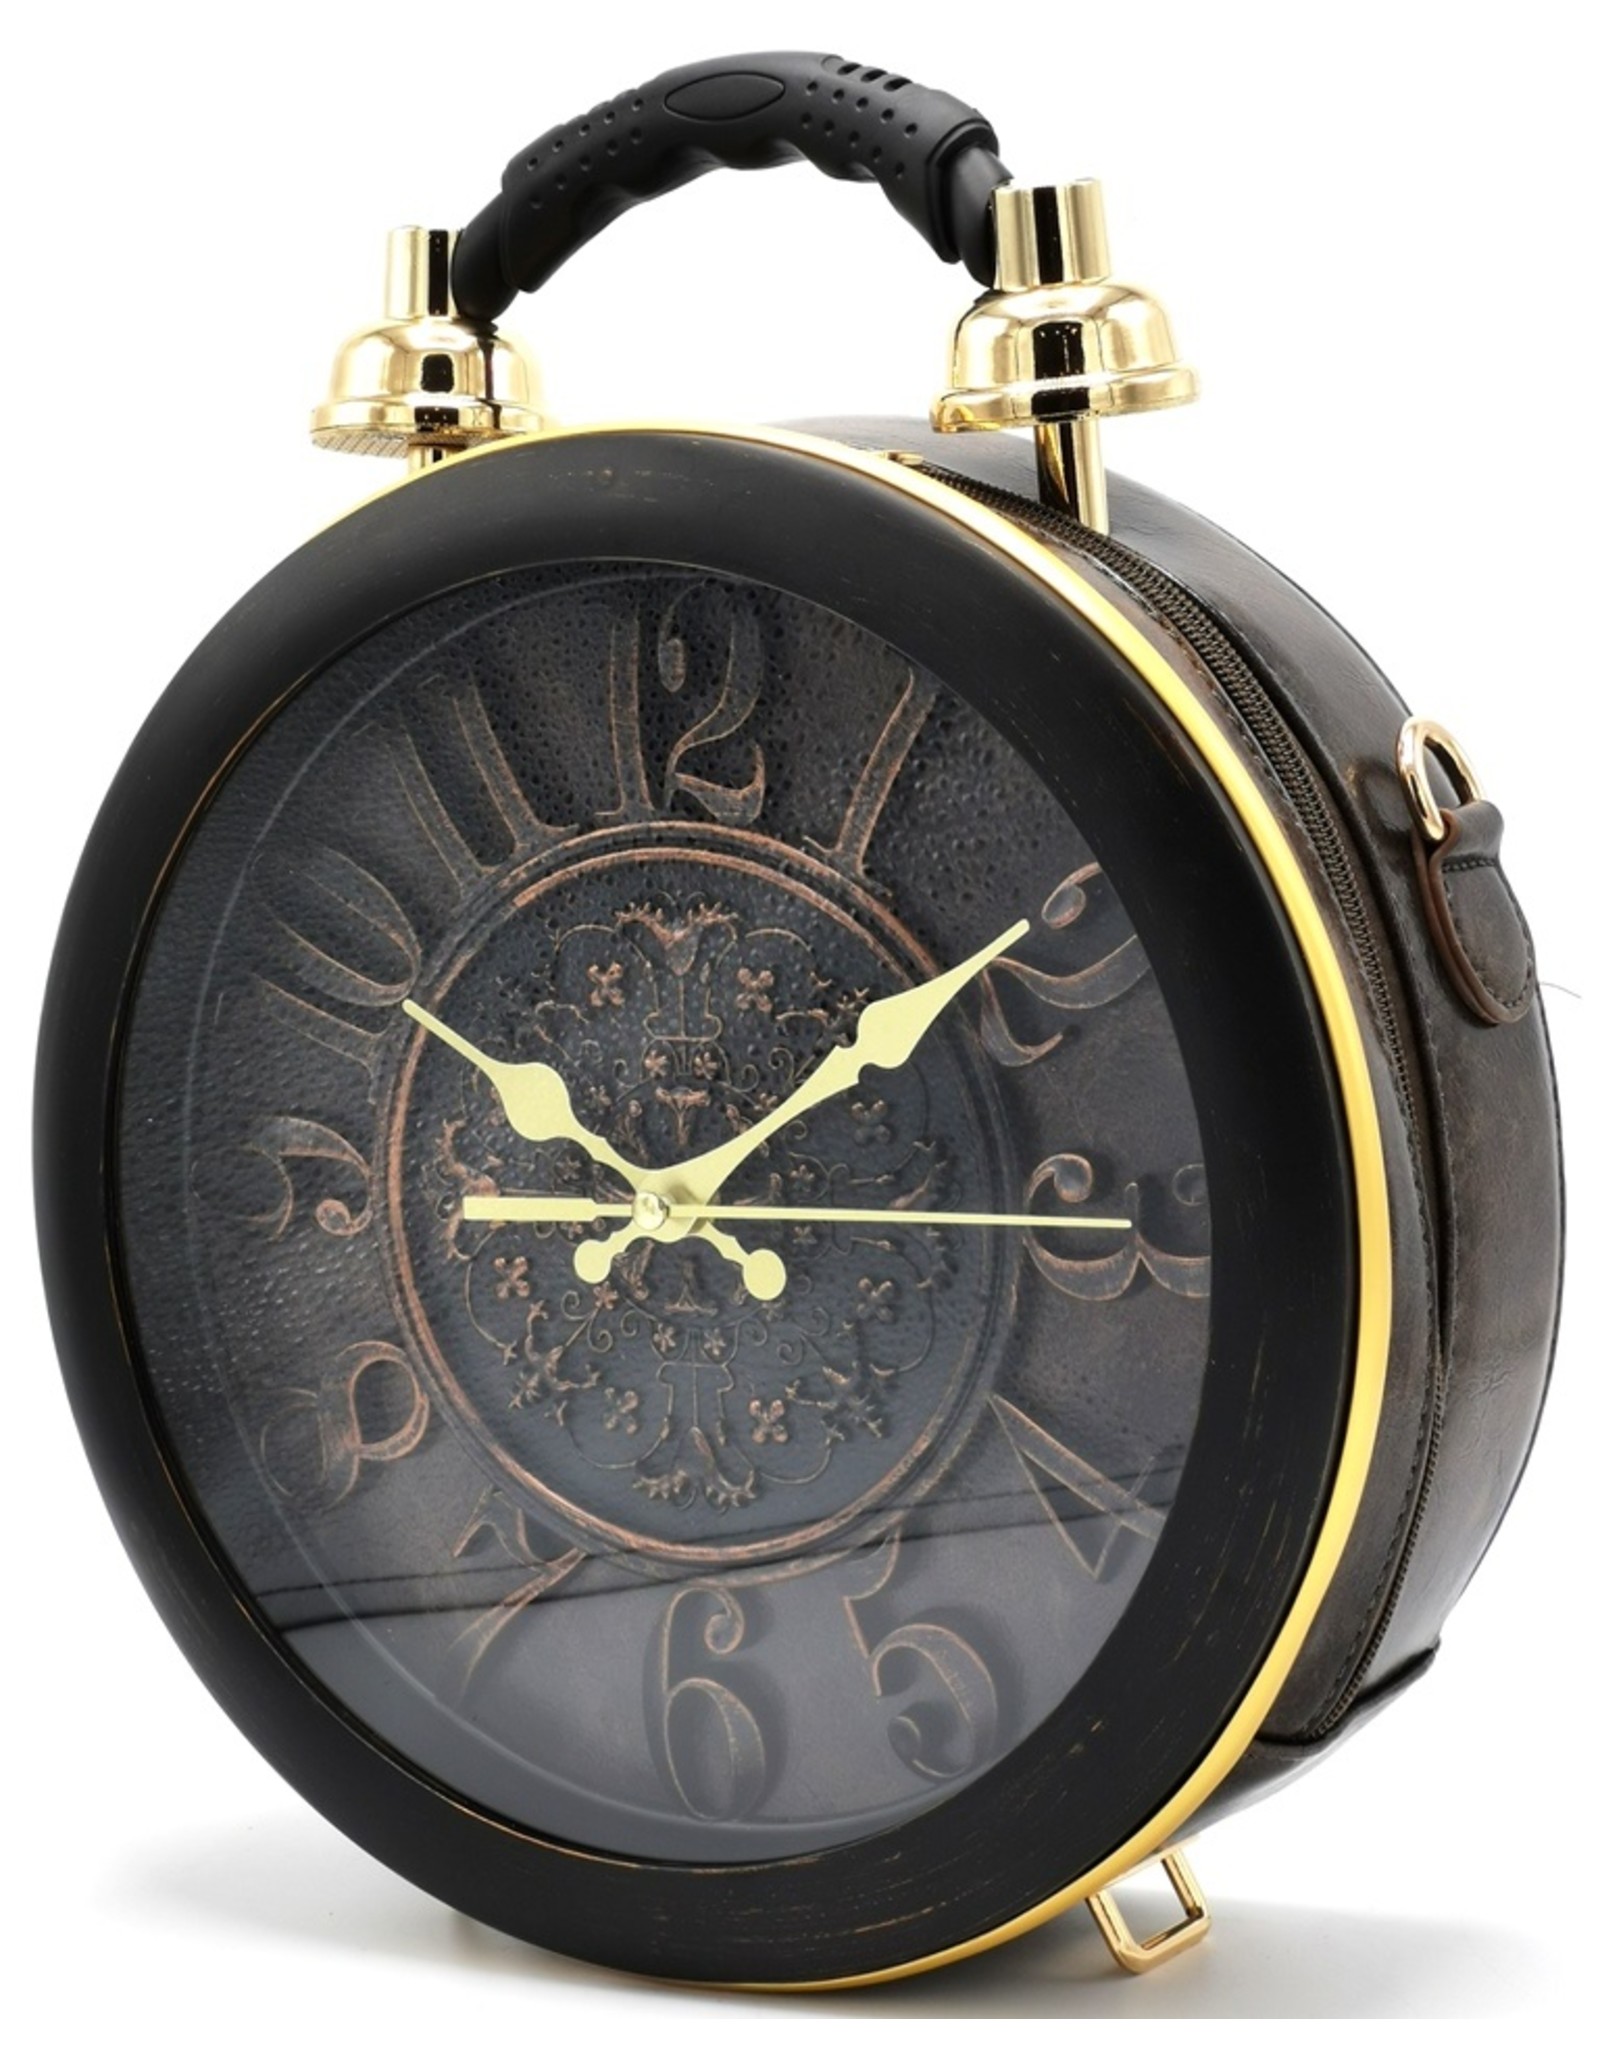 Magic Bags Fantasy bags - Steampunk Clock bag with Working clock antique black